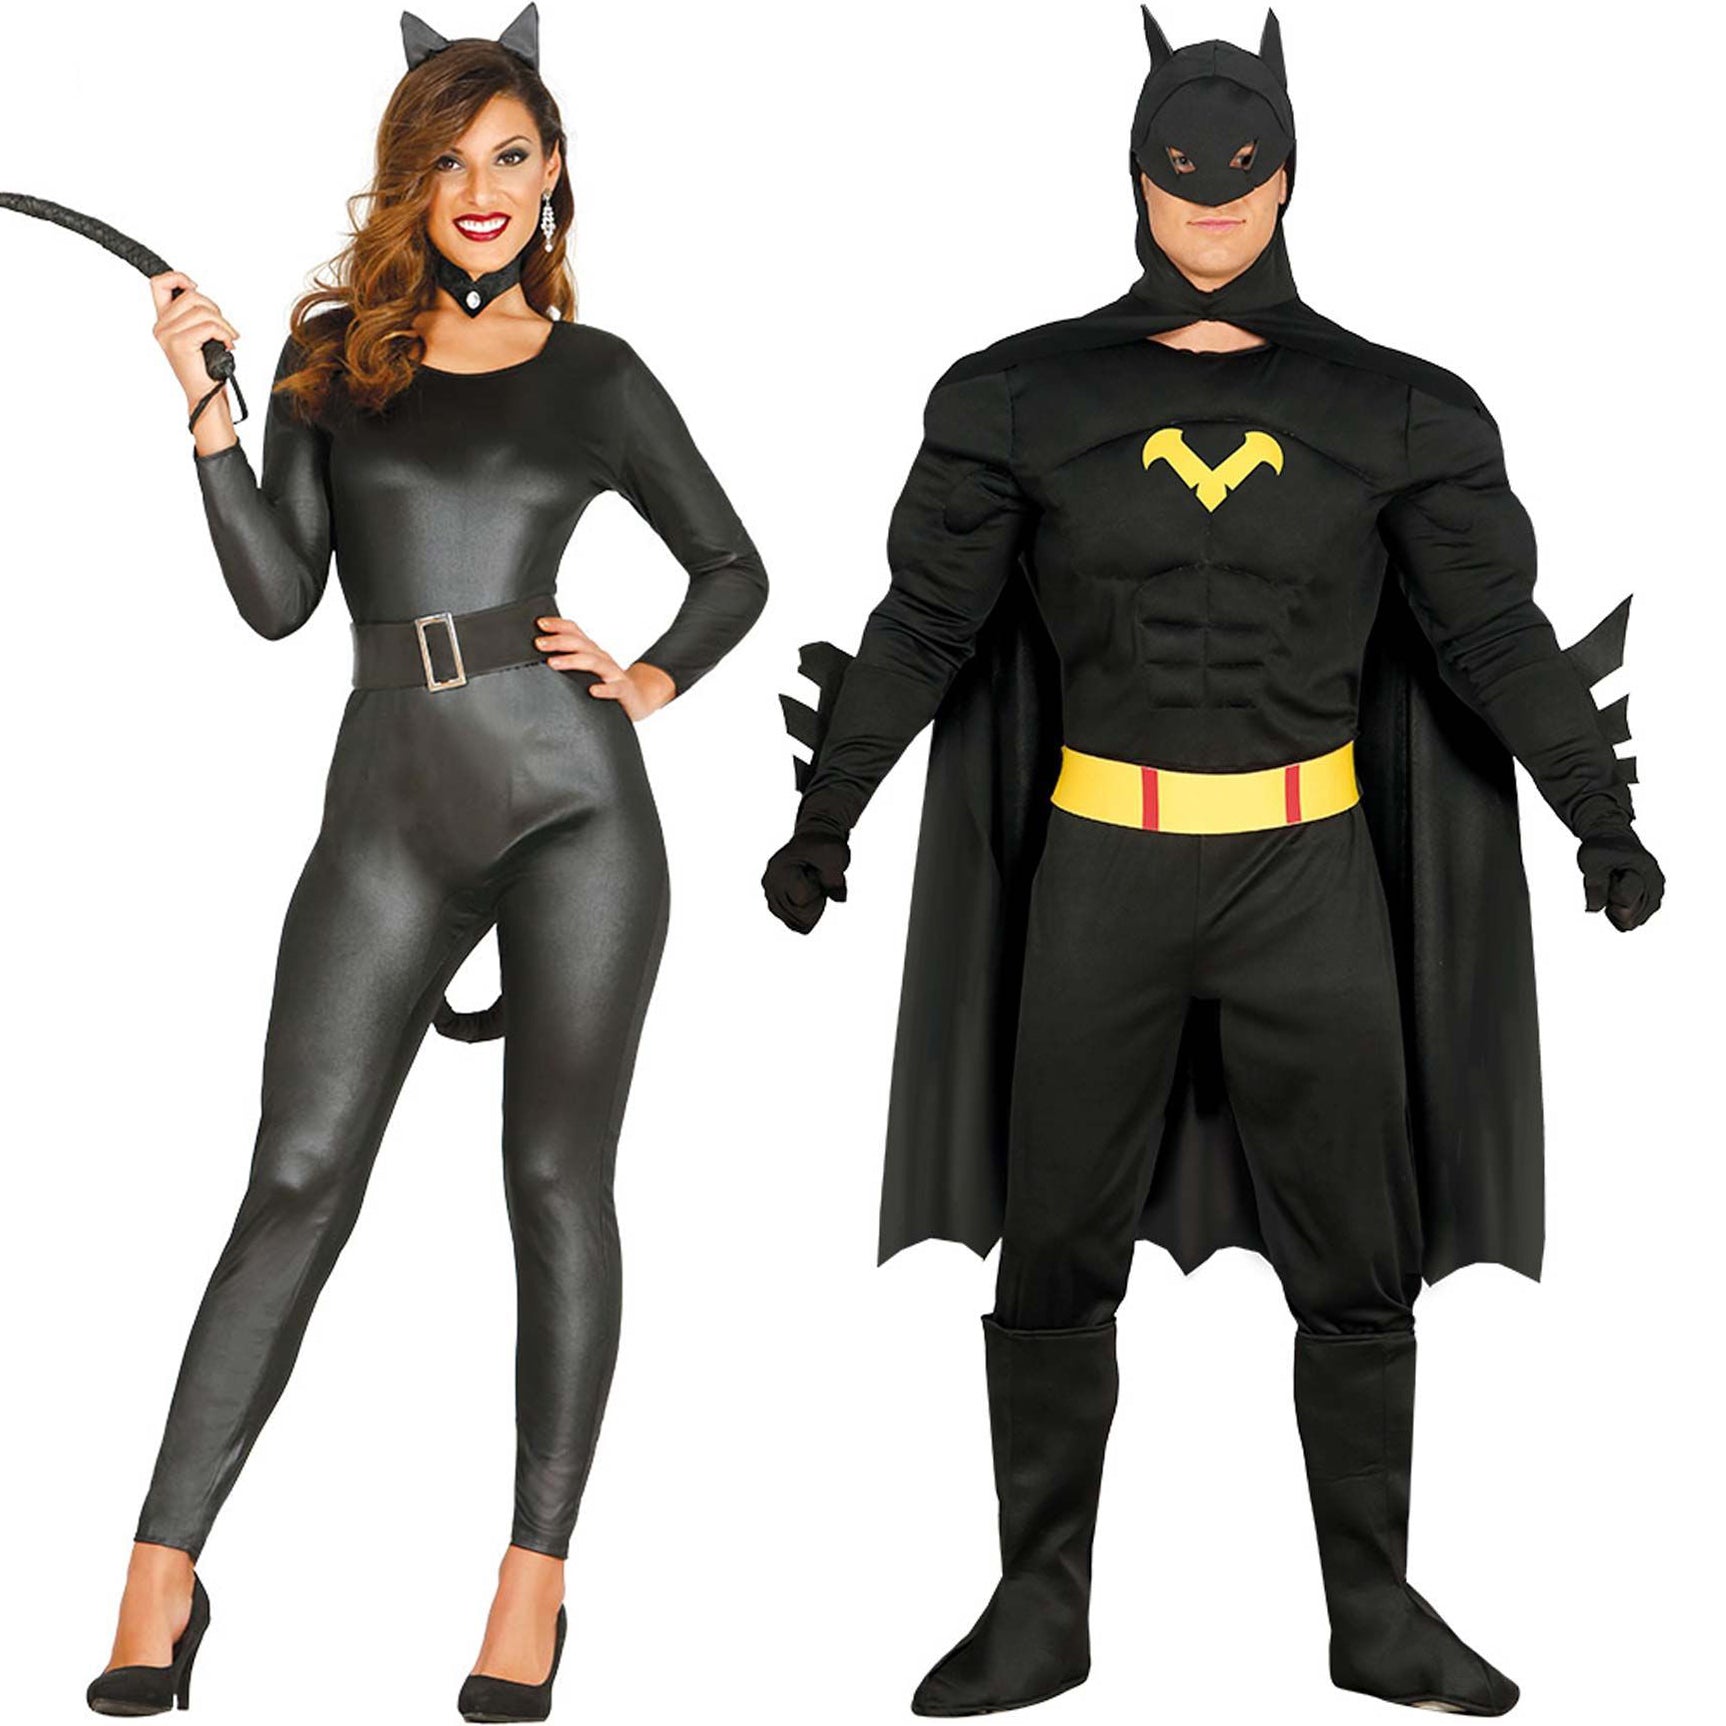 Acquista: Costumi di coppia da Batman e Batgirl